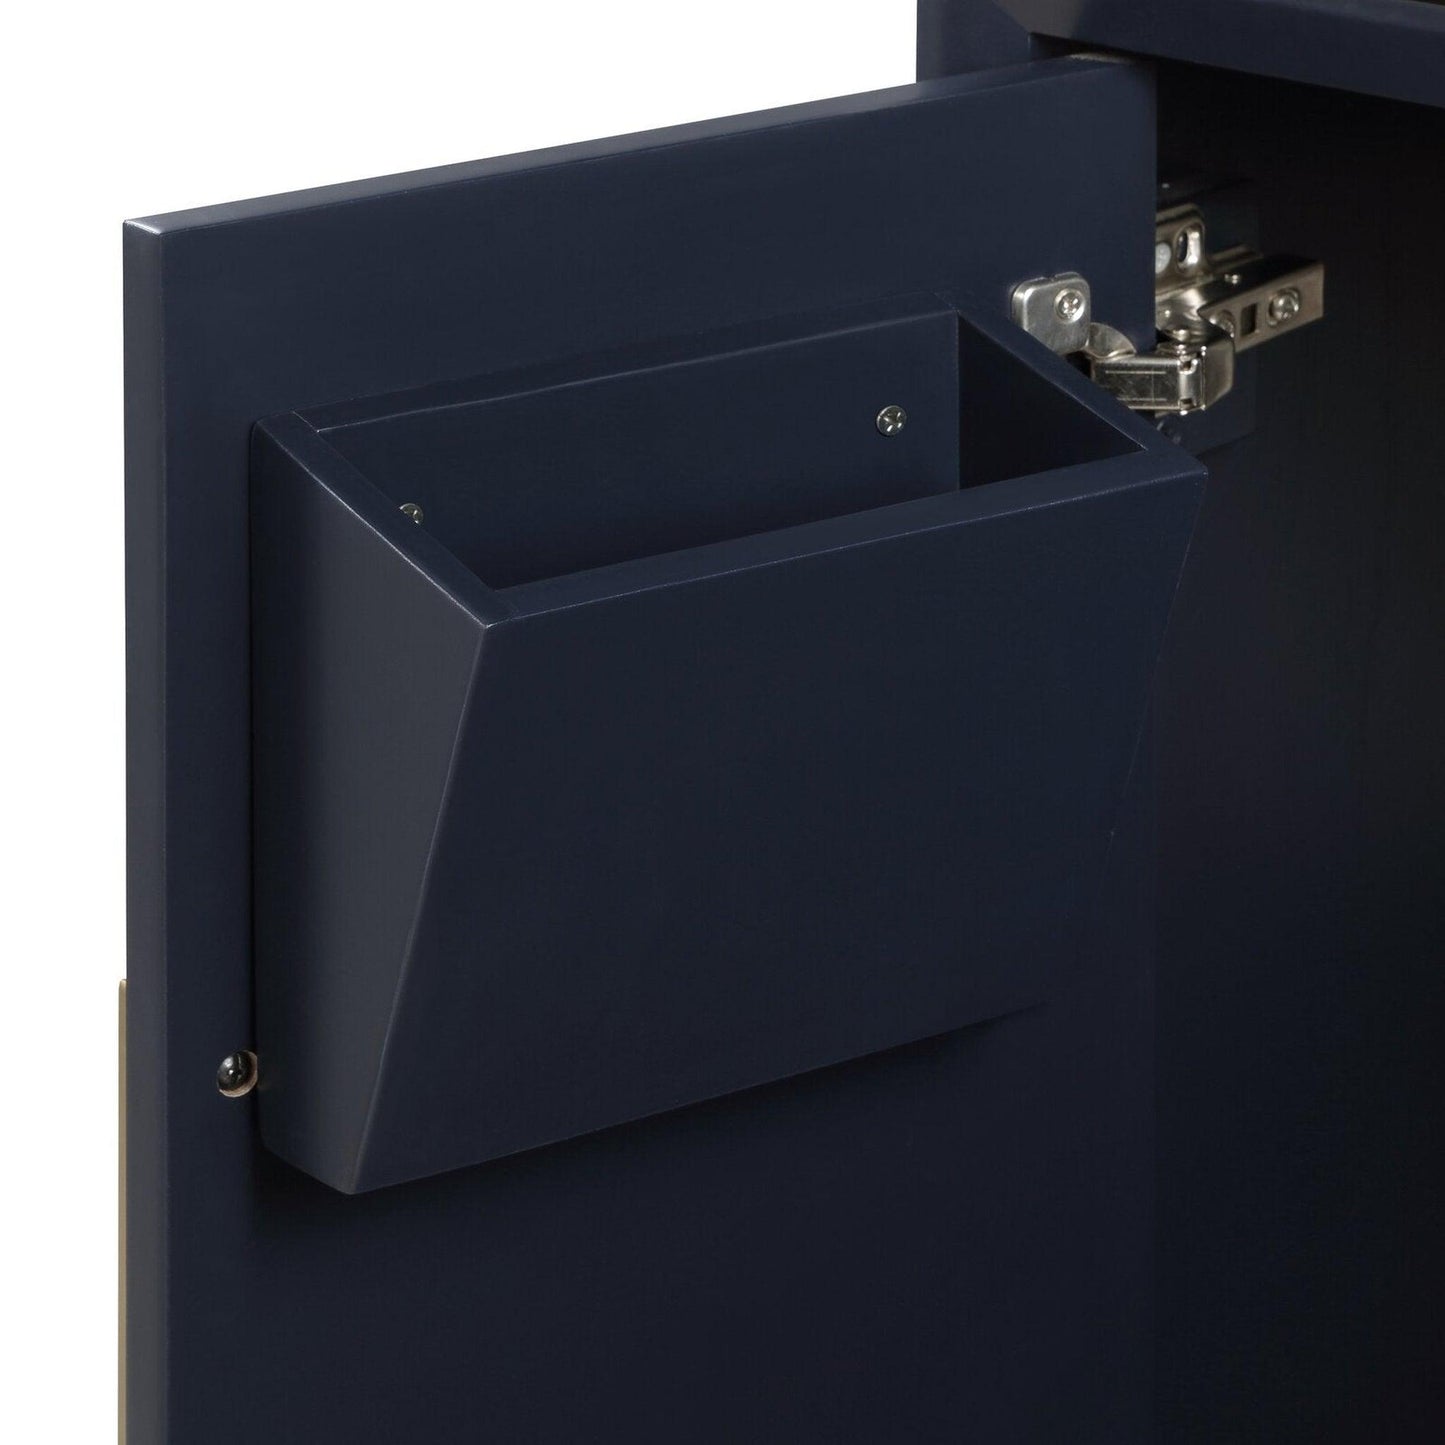 Bemma Design Gracie 60" Pacific Blue Solid Wood Freestanding Bathroom Vanity With Double 3-Hole Italian Carra Marble Vanity Top, Rectangle Undermount Sink, Backsplash and Satin Brass Trim